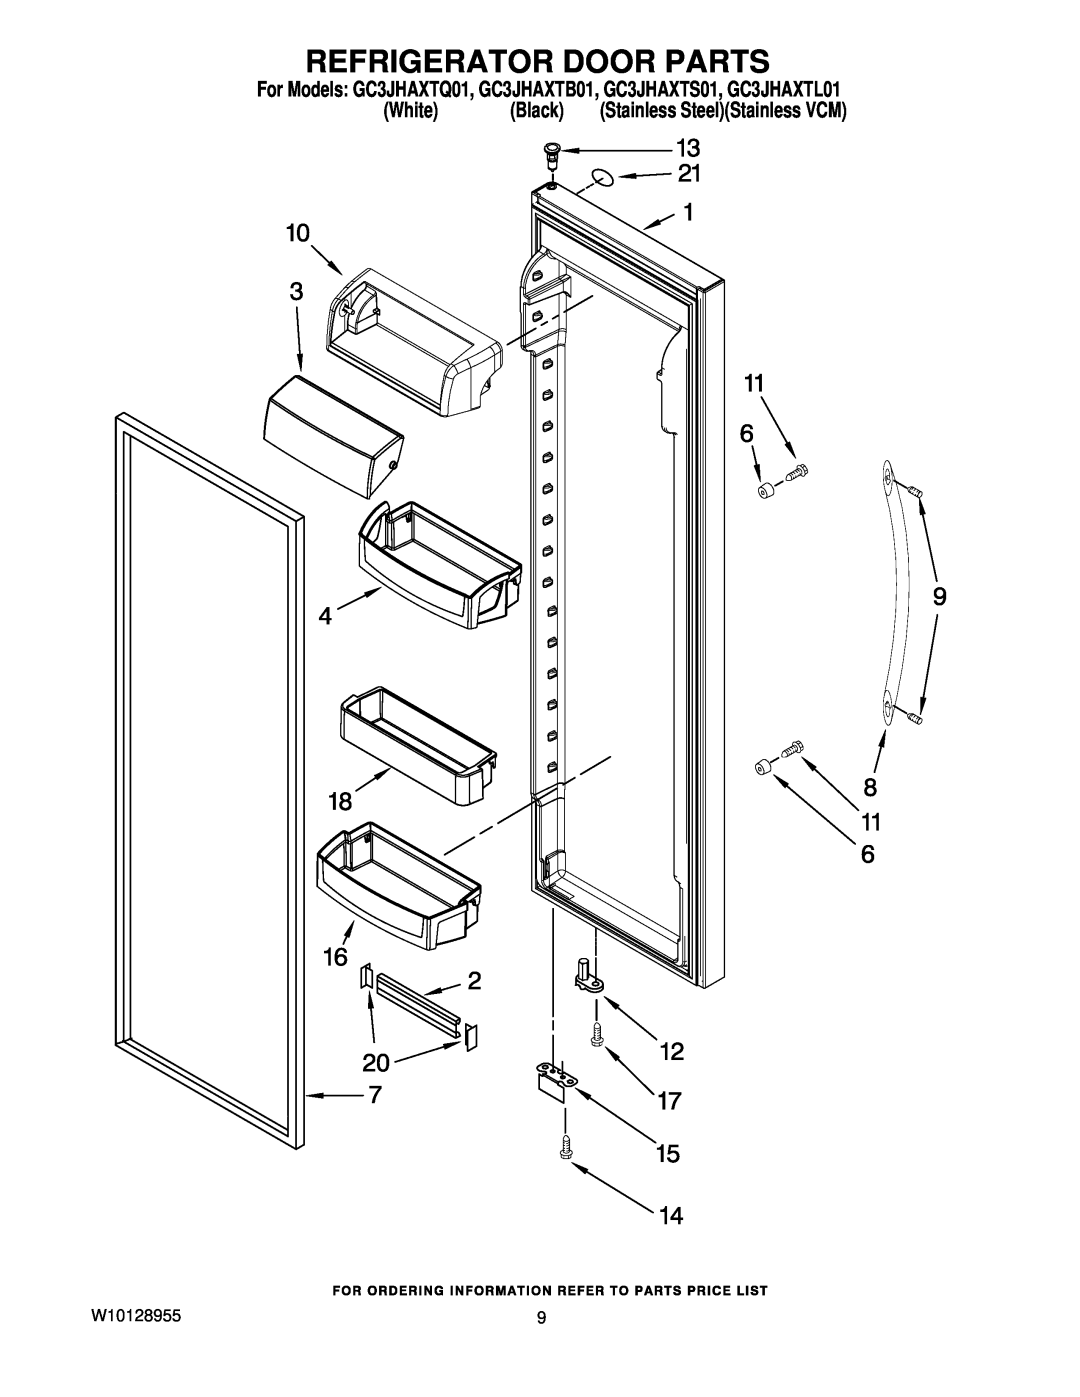 Whirlpool manual Refrigerator Door Parts, For Models GC3JHAXTQ01, GC3JHAXTB01, GC3JHAXTS01, GC3JHAXTL01, White, Black 